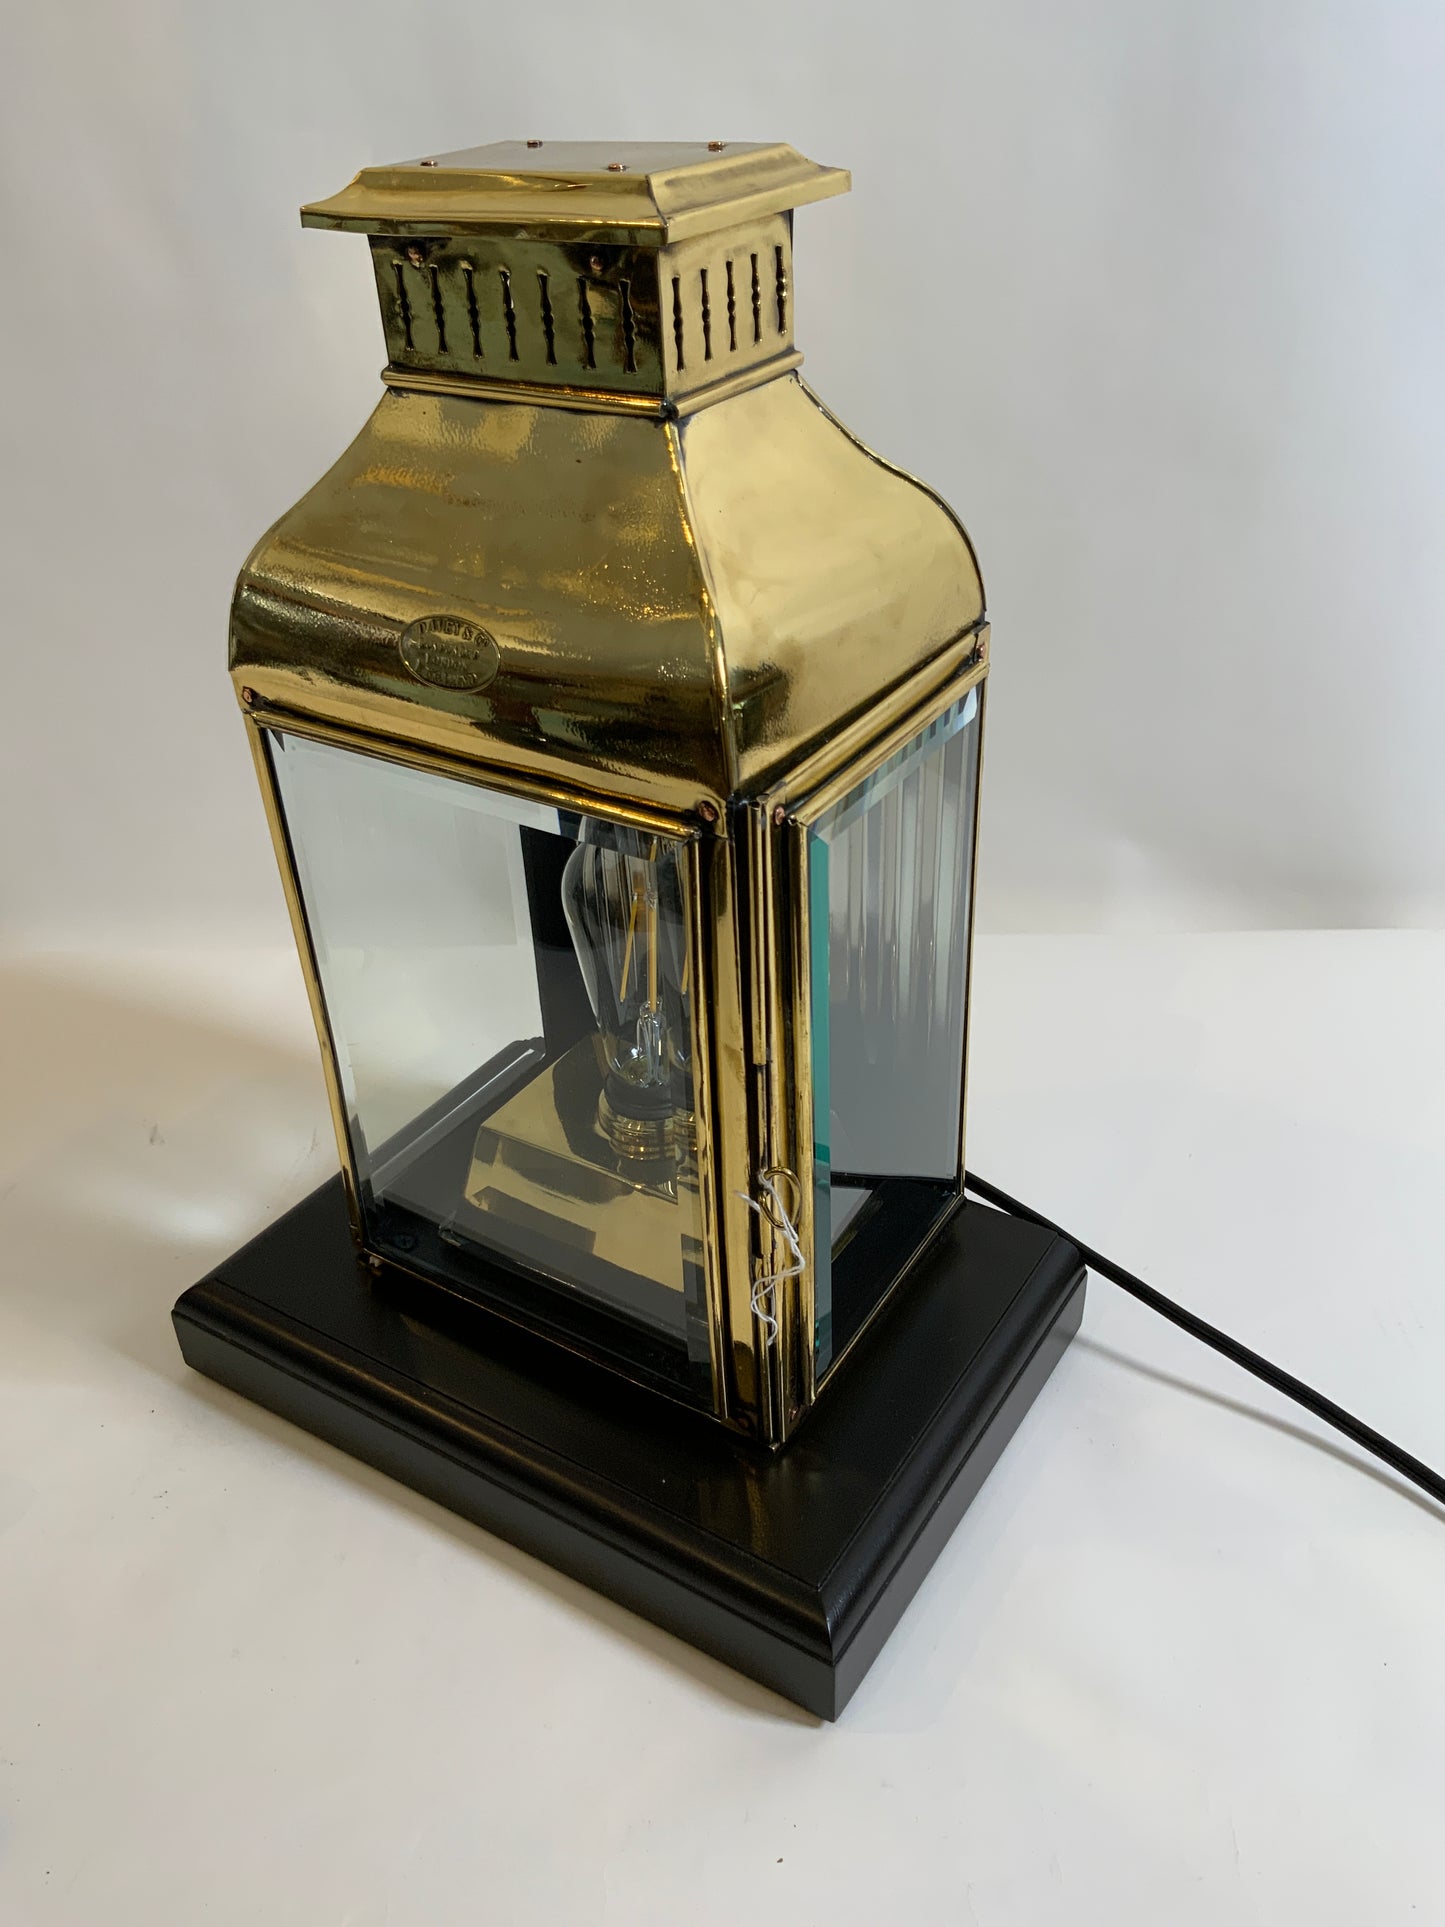 Ship's Cabin Lantern by Davey of London - Lannan Gallery